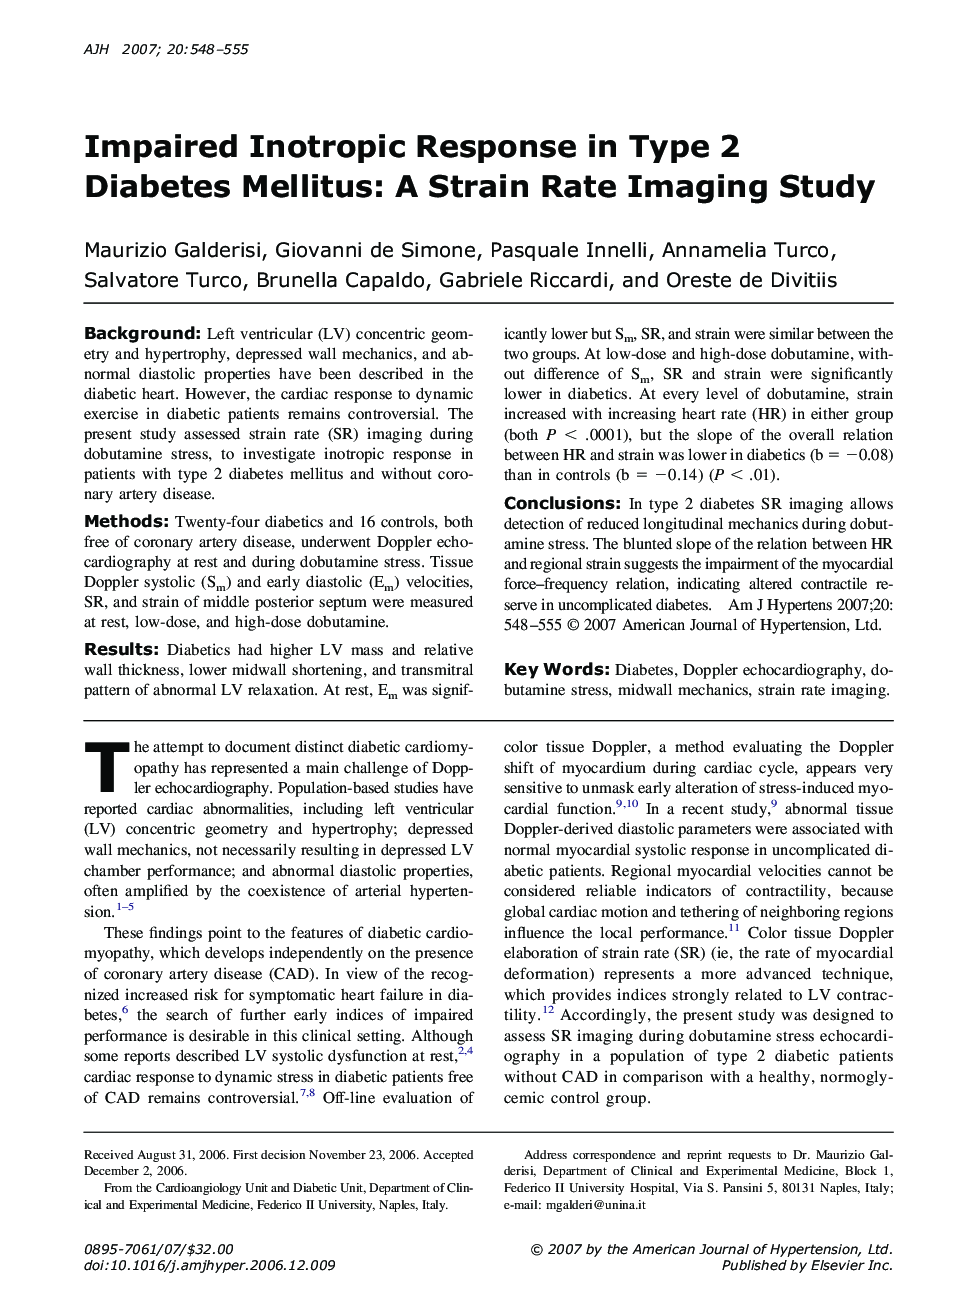 Impaired Inotropic Response in Type 2 Diabetes Mellitus: A Strain Rate Imaging Study